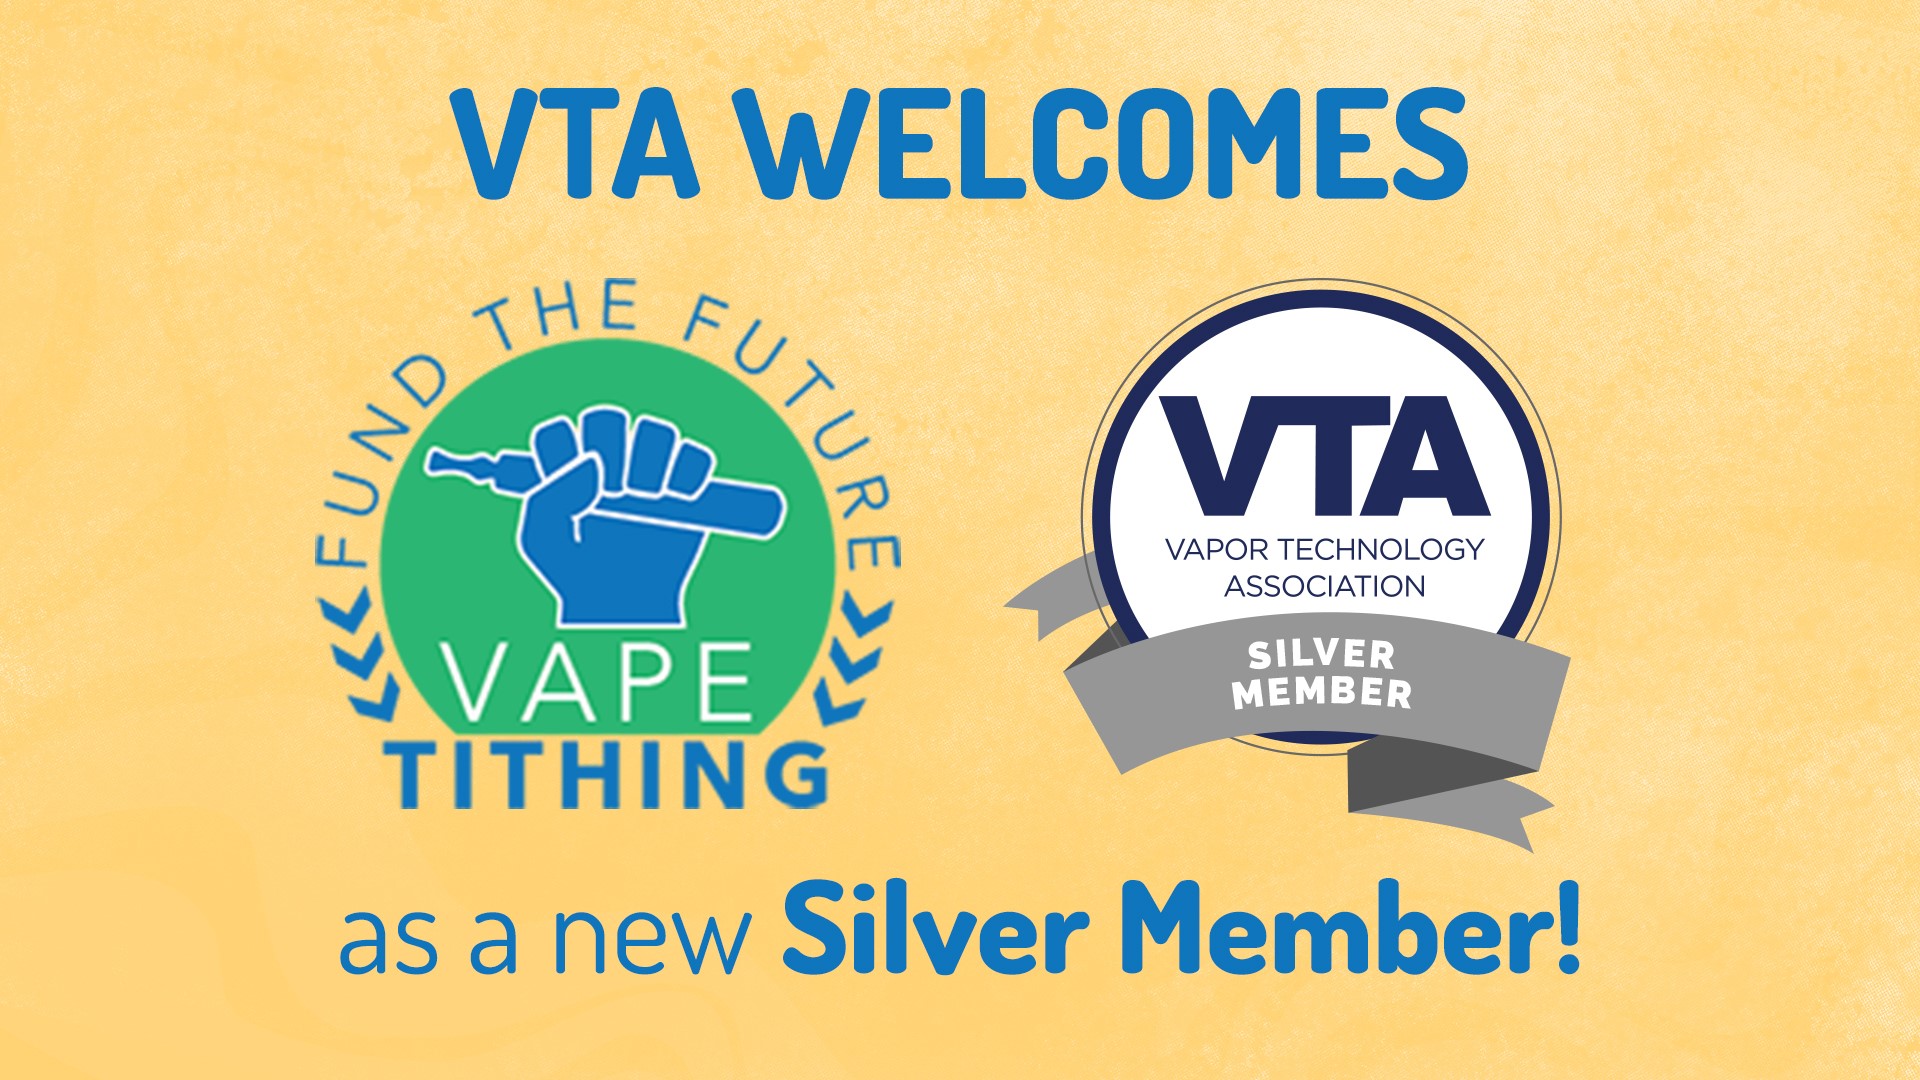 Vape Tithing joins the VTA!